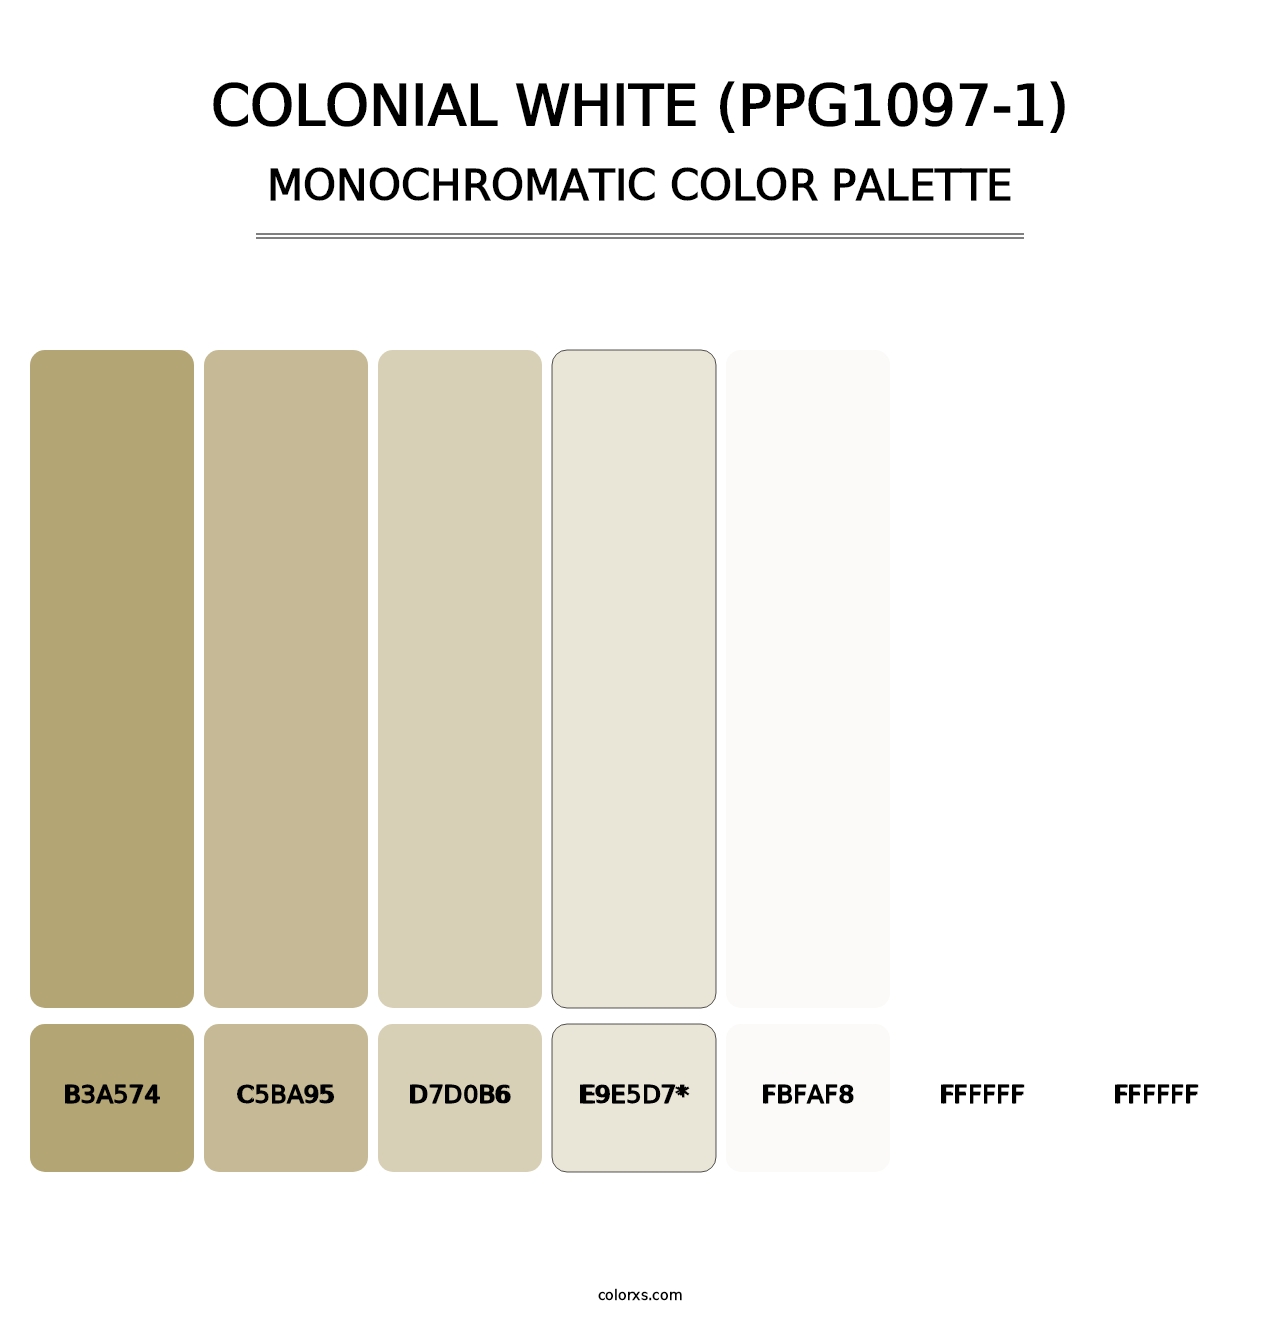 Colonial White (PPG1097-1) - Monochromatic Color Palette